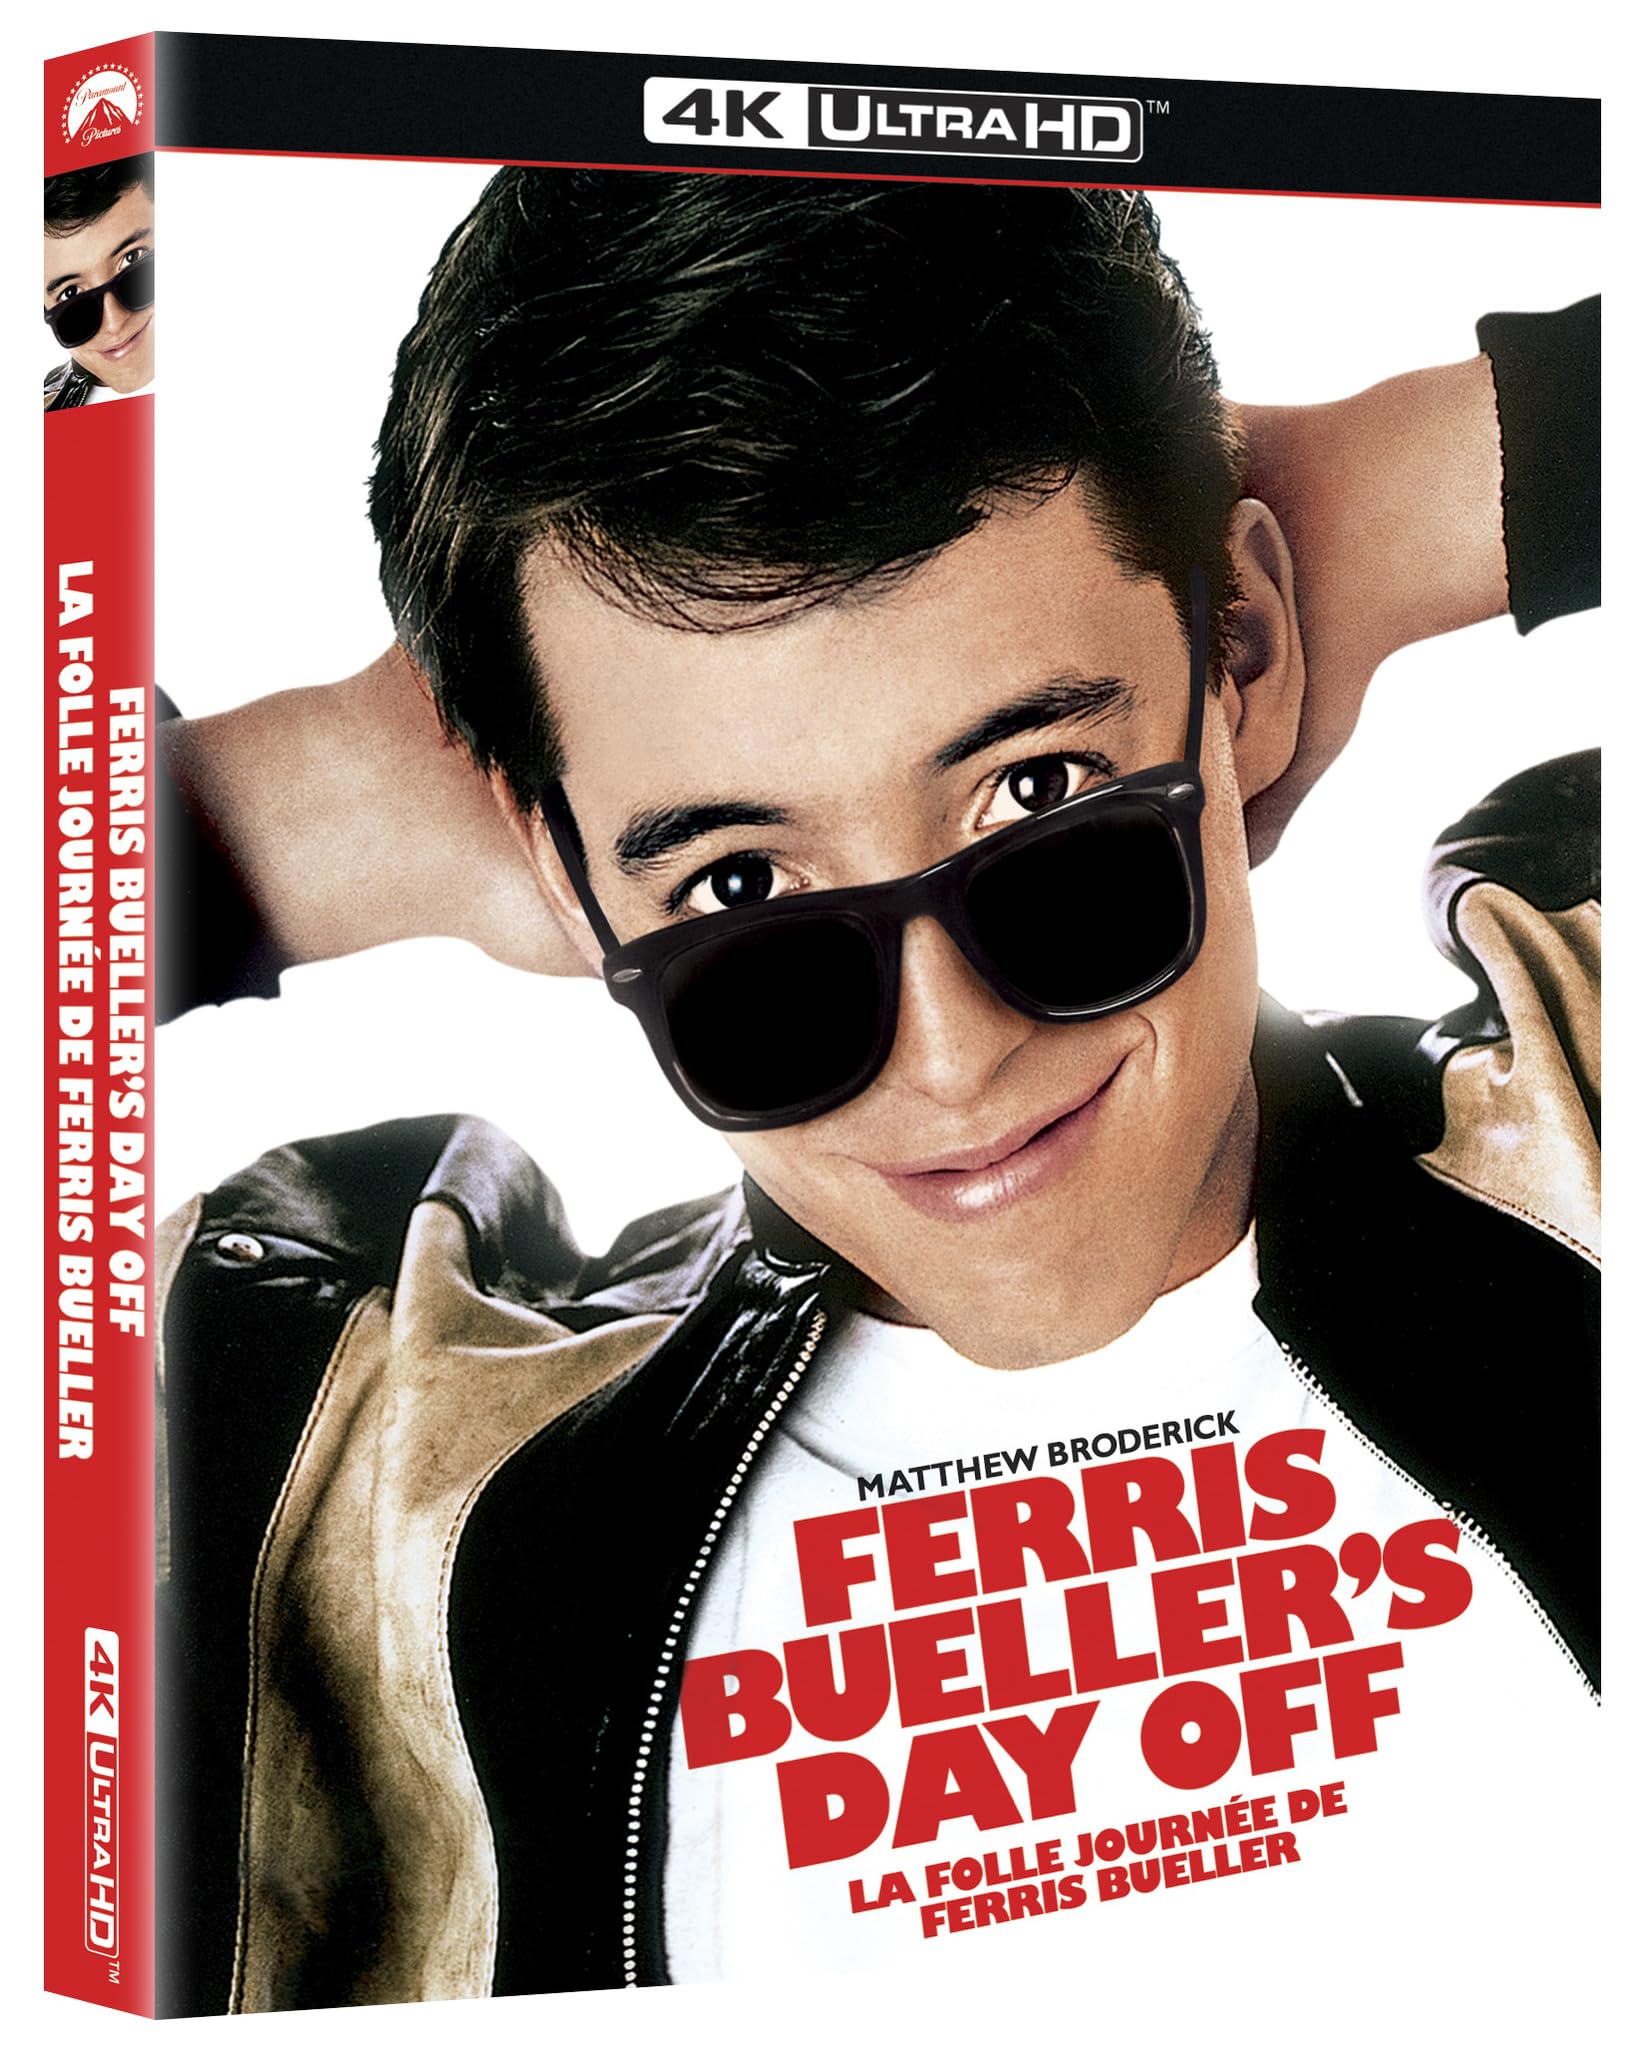 Ferris Bueller’s Day Off (4K-UHD) on MovieShack